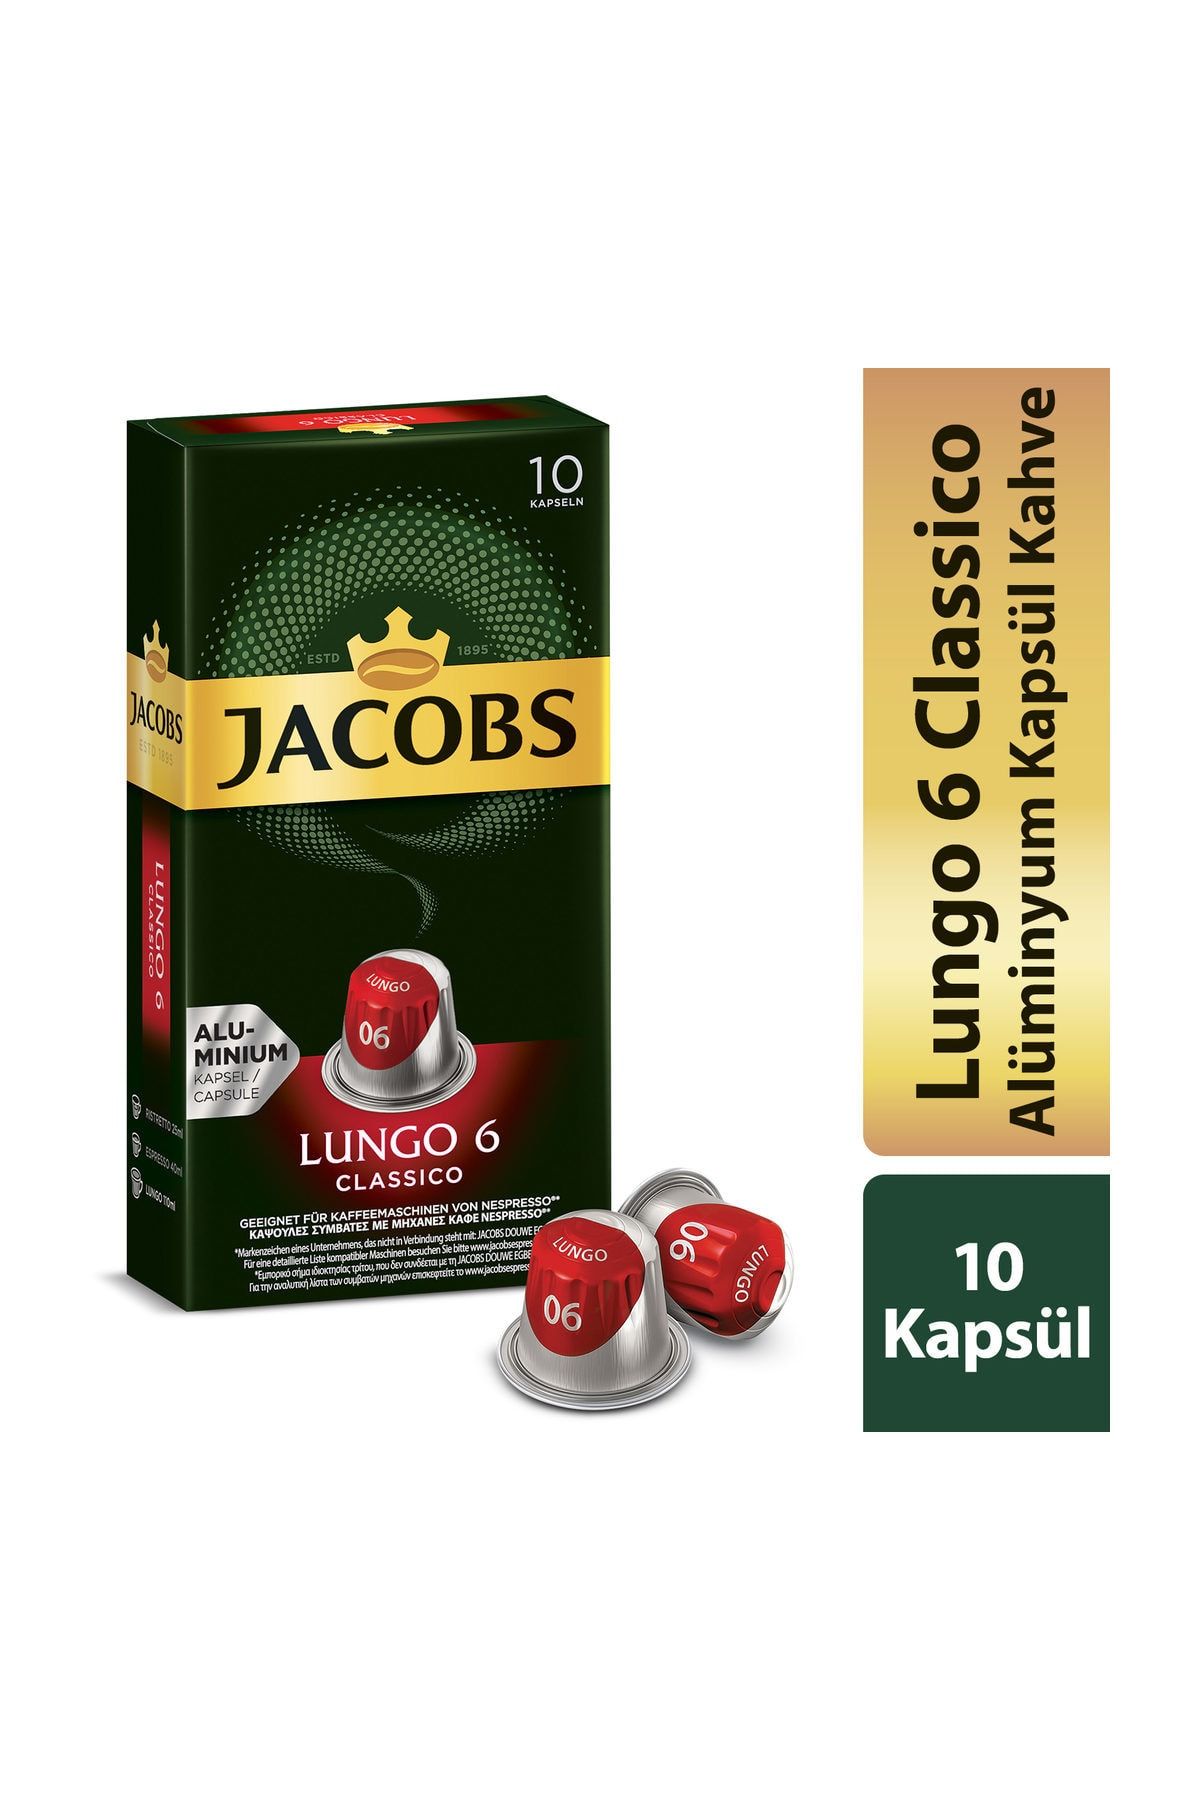 Jacobs Jacobs Capsule Lungo 6 Classico 52 G